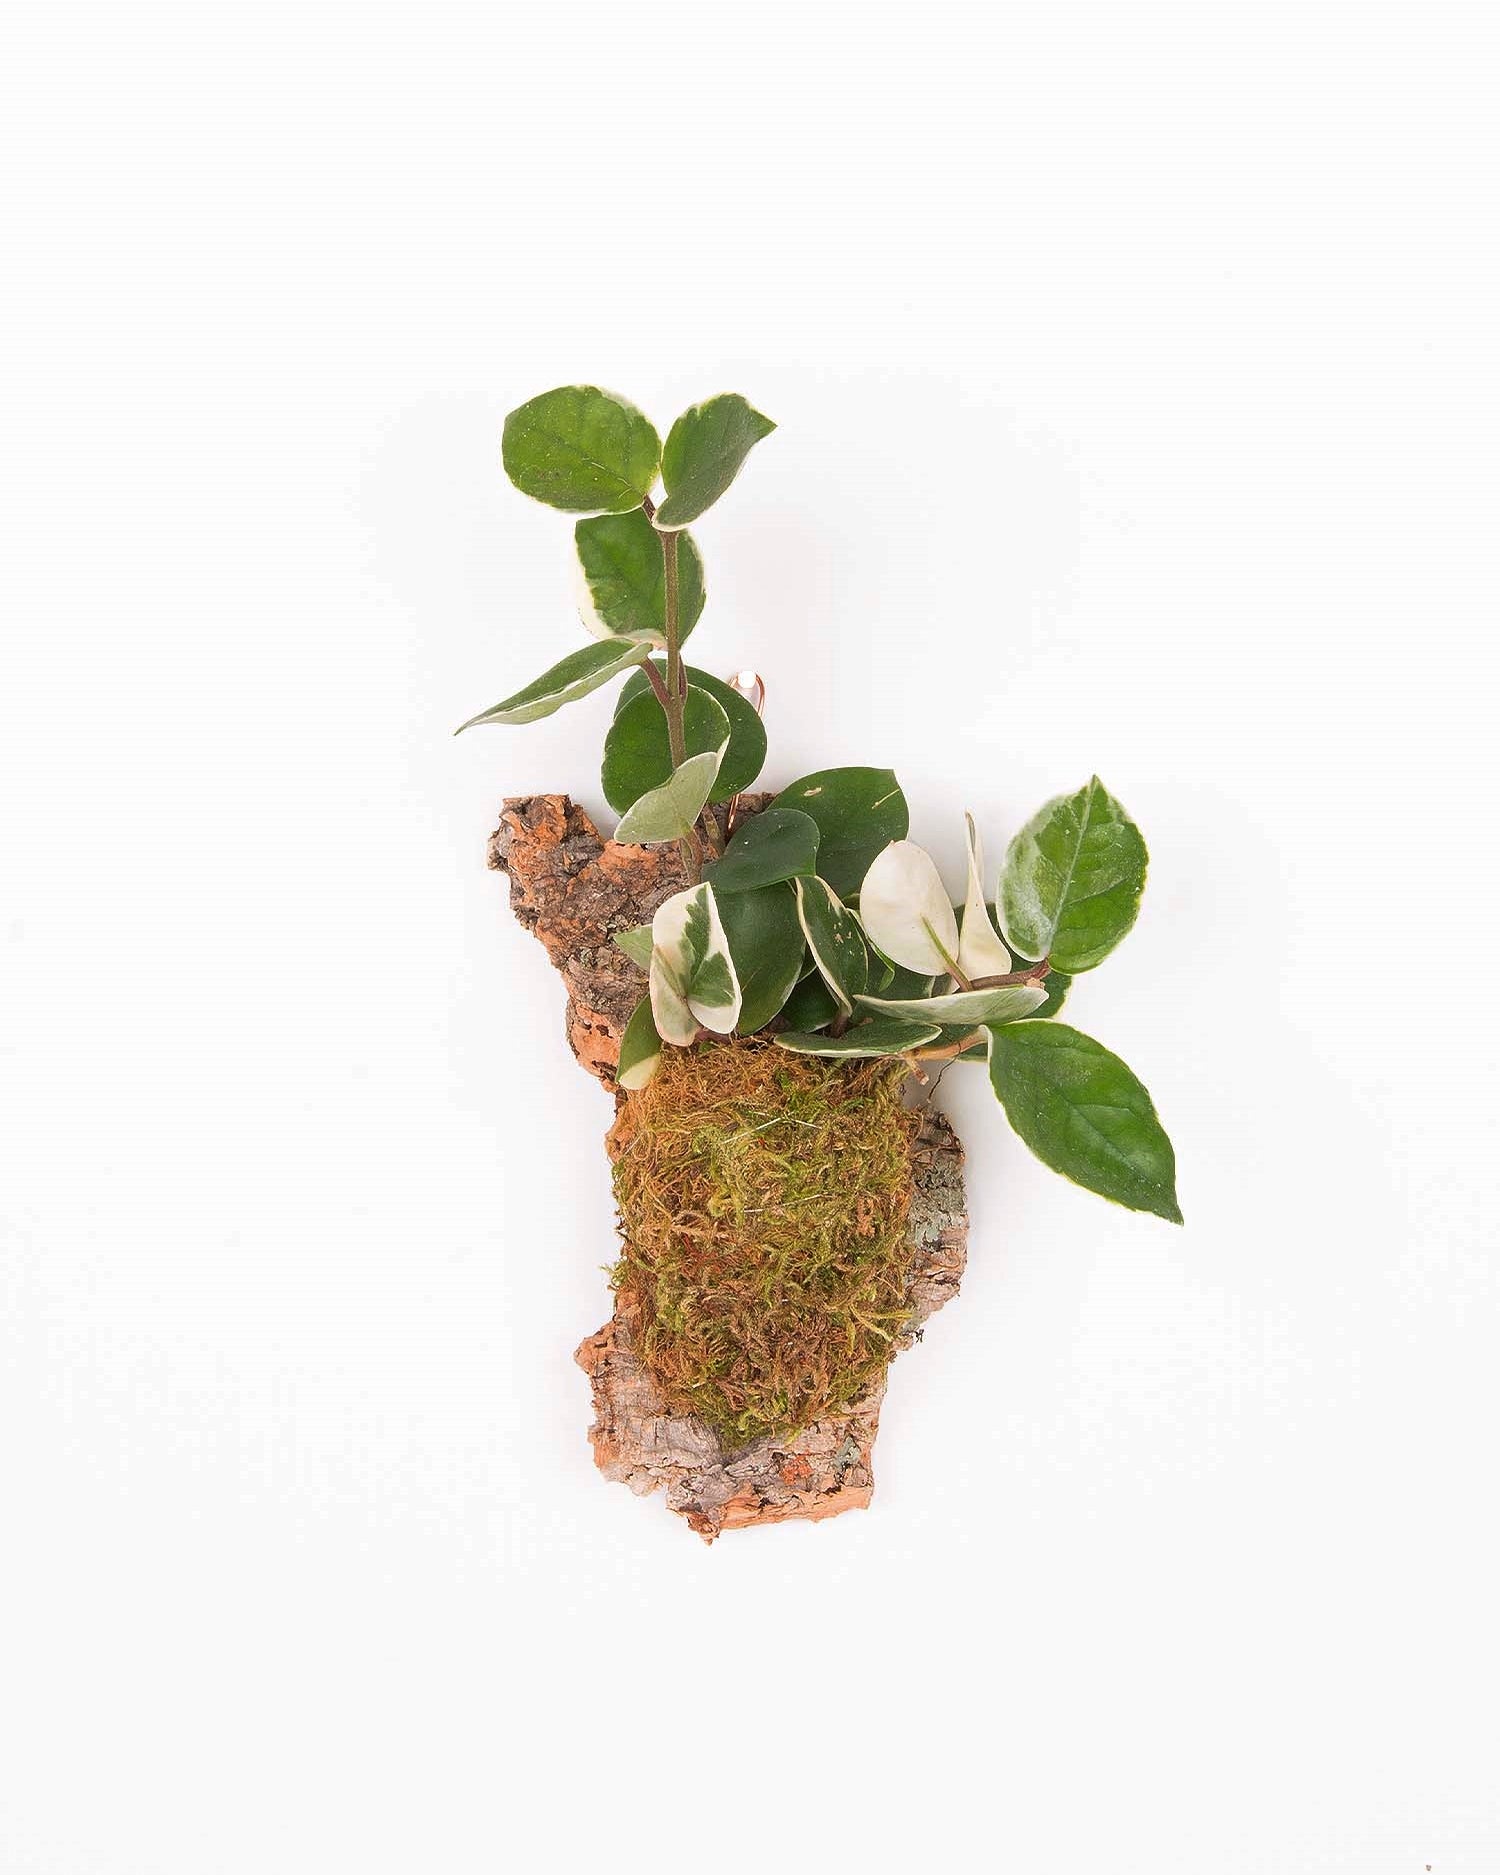 Hoya 'Krimson Queen' mounted on cork using sphagnum moss